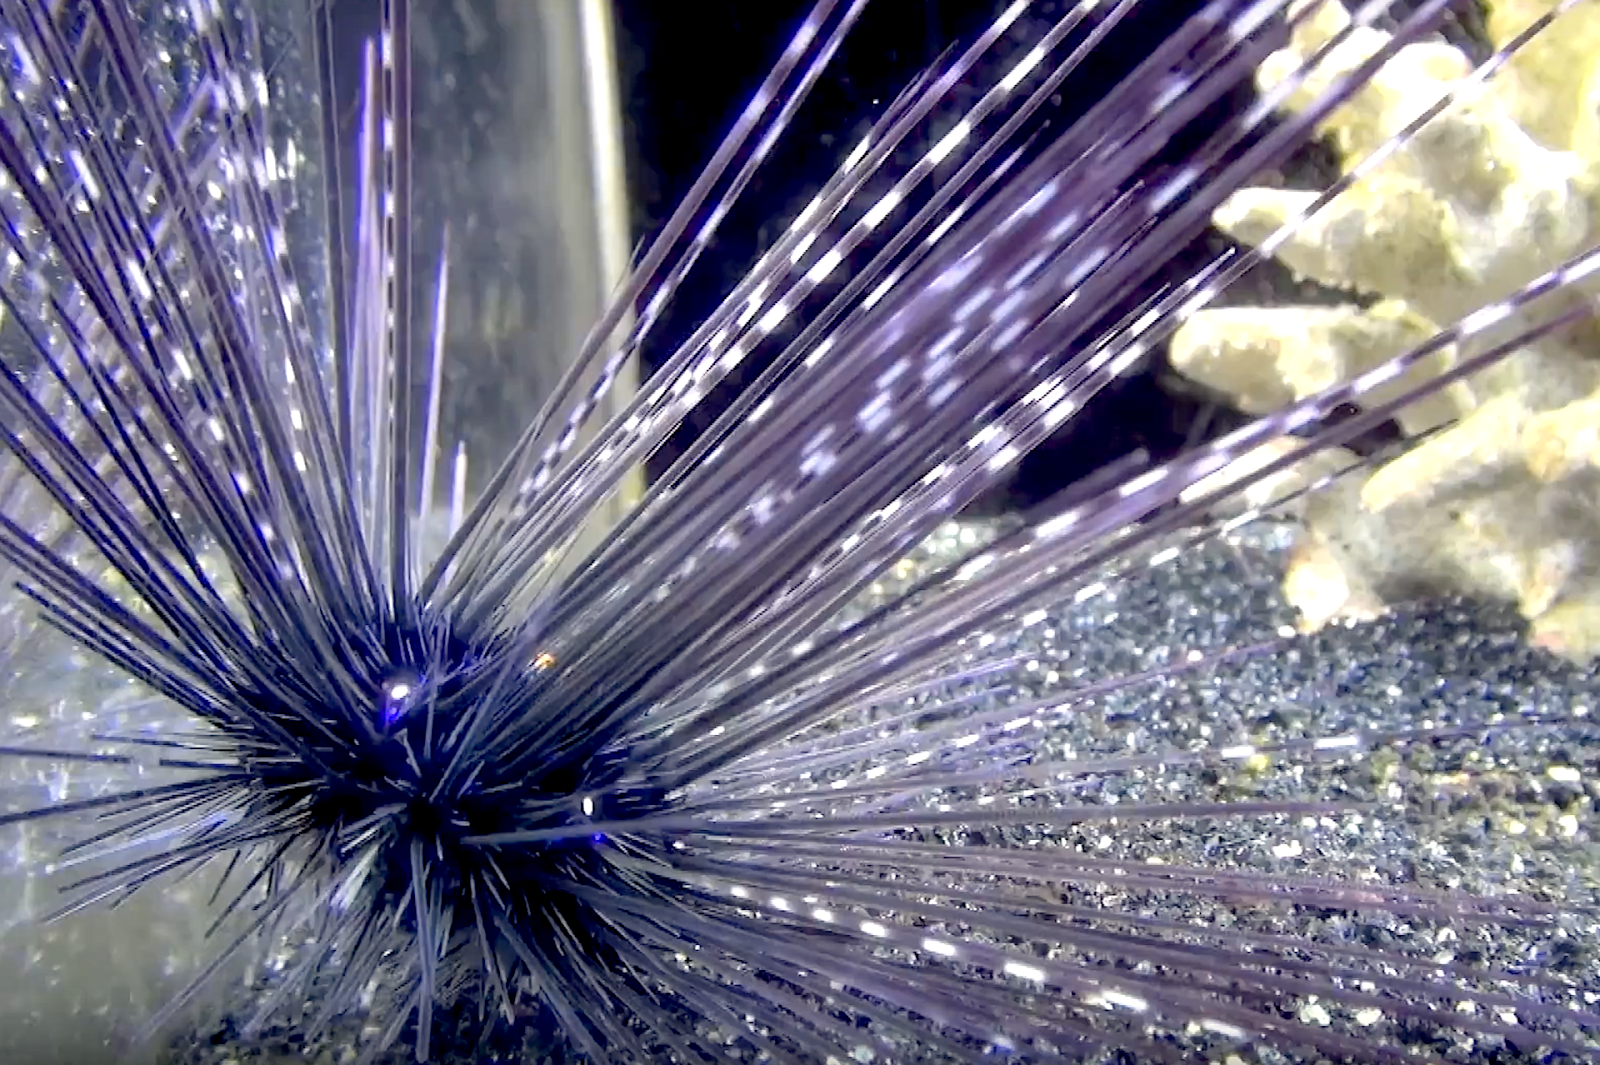 Aquarium Movies Japan Archive 生きている魚図鑑 ガンガゼ Diadem Urchin Black Long Spine Urchin Diadema Setosum